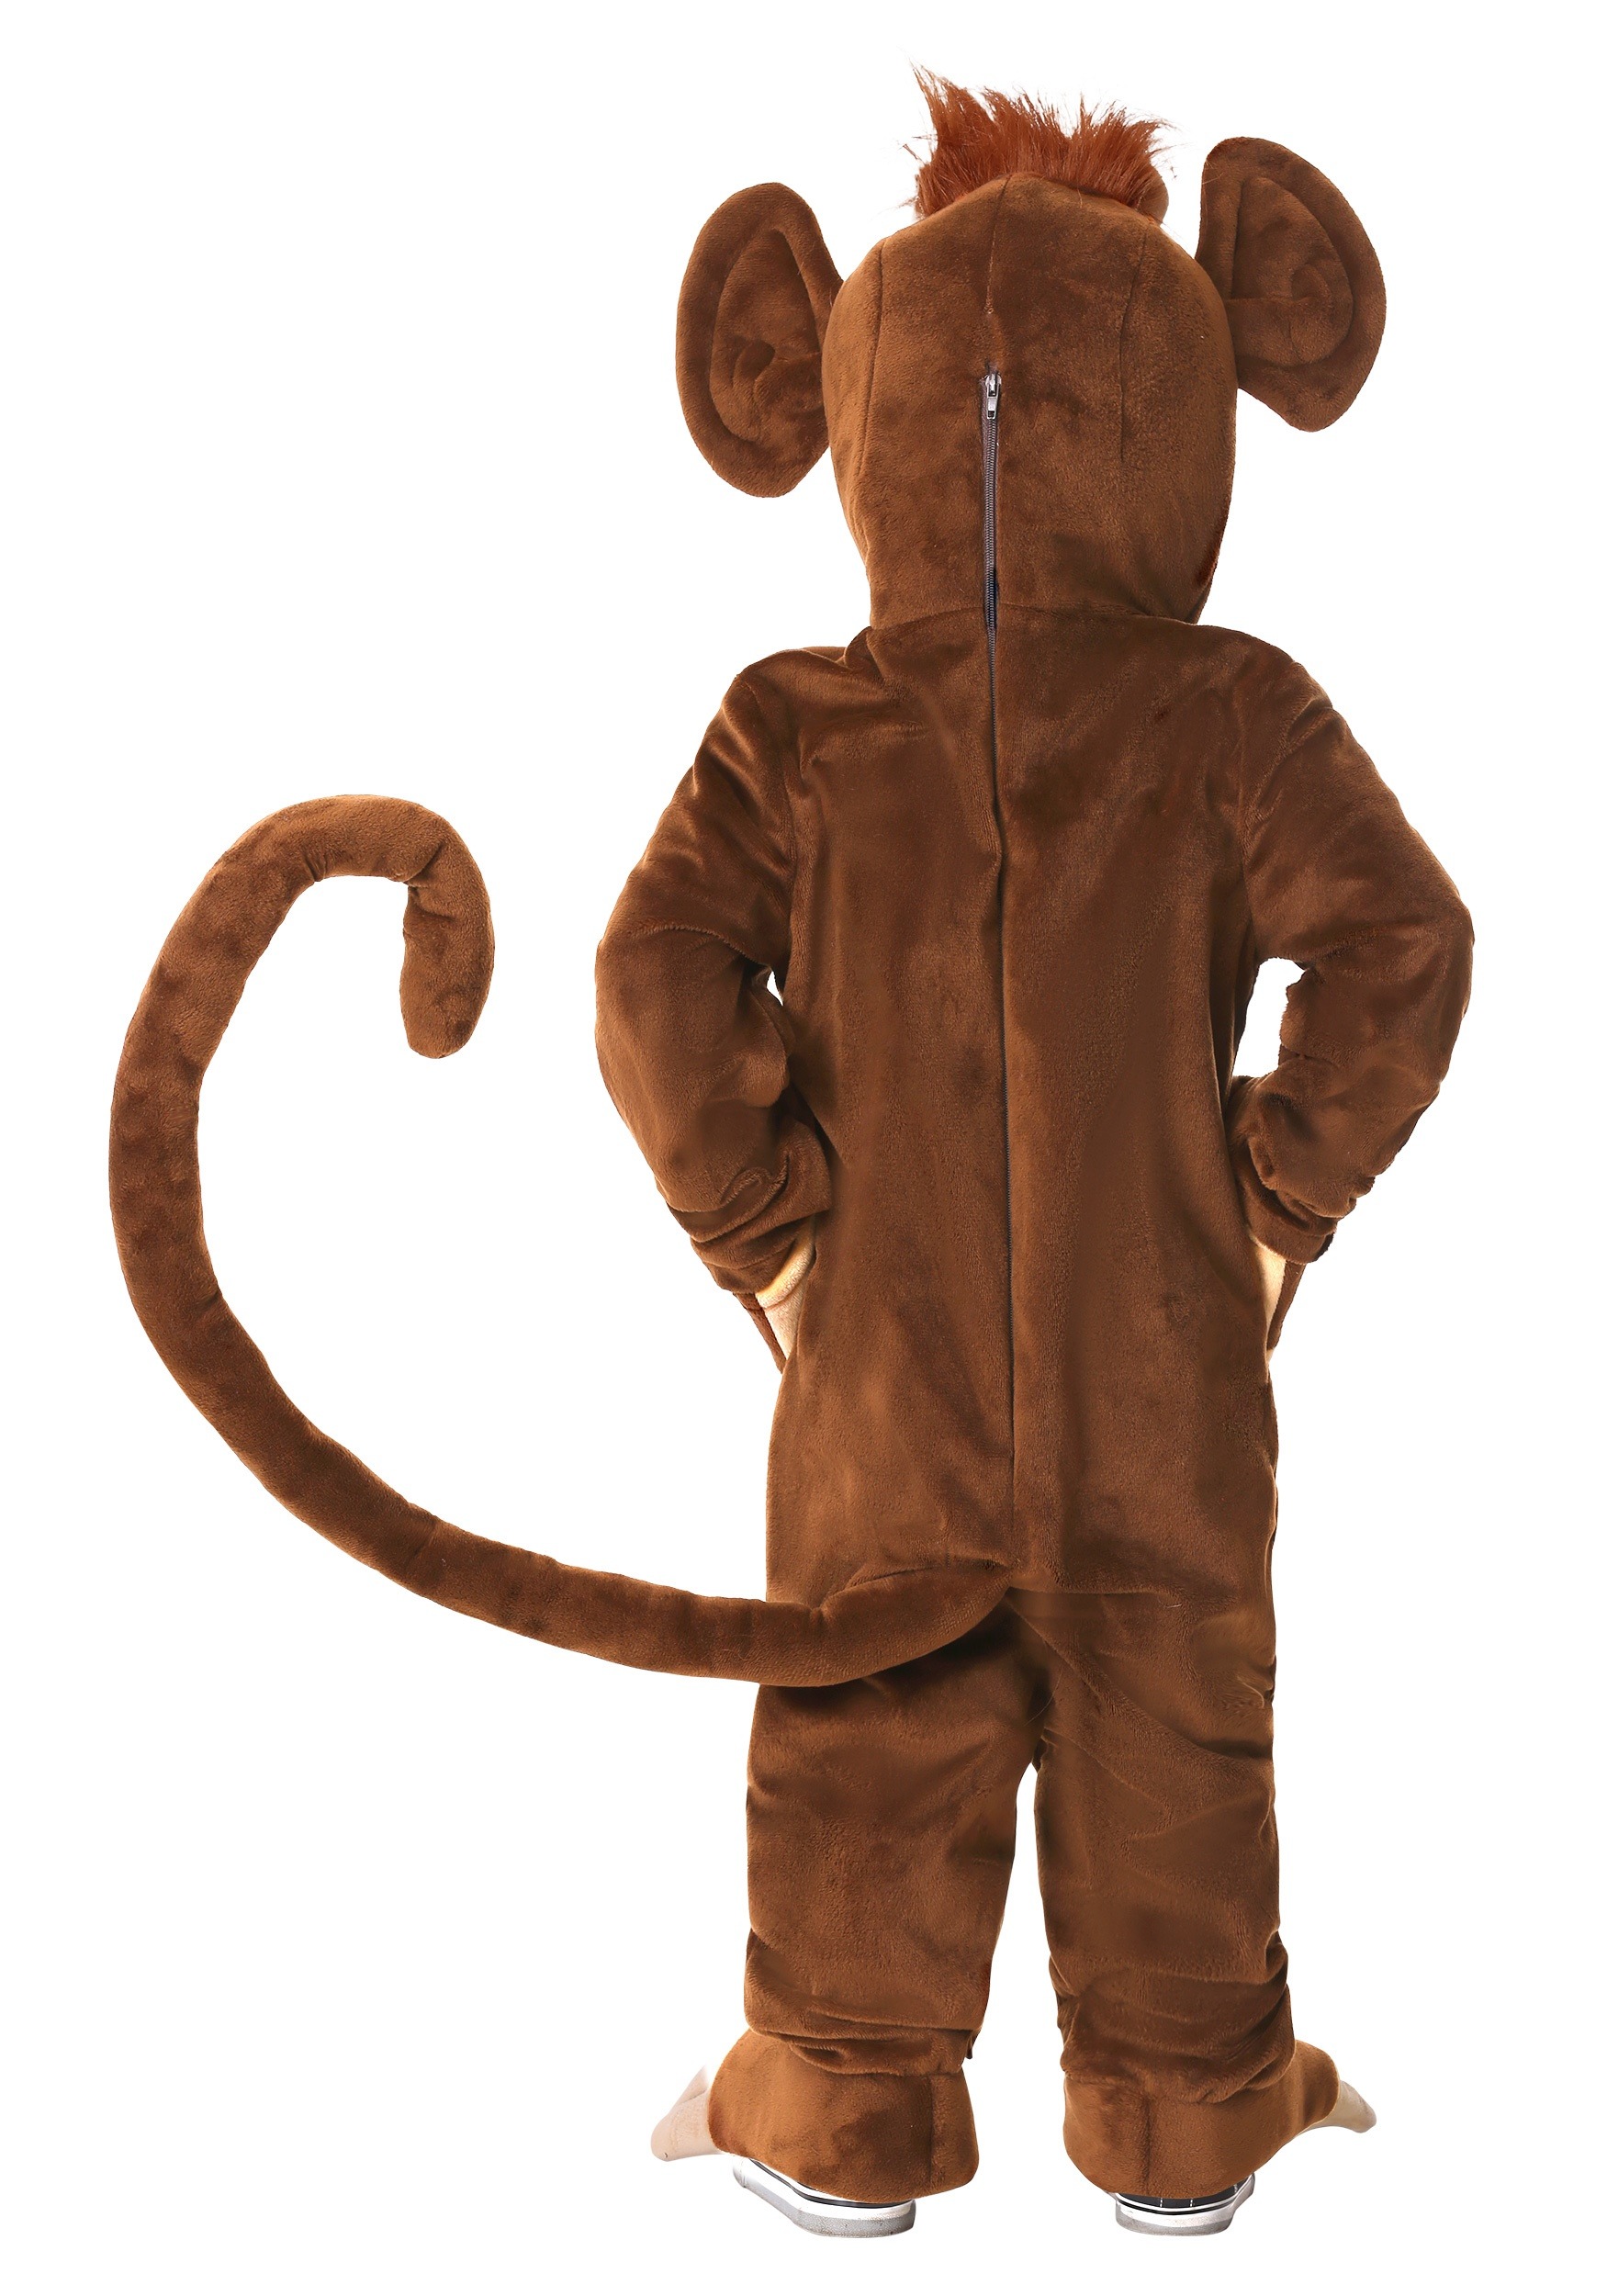 Toddler Funky Monkey Costume